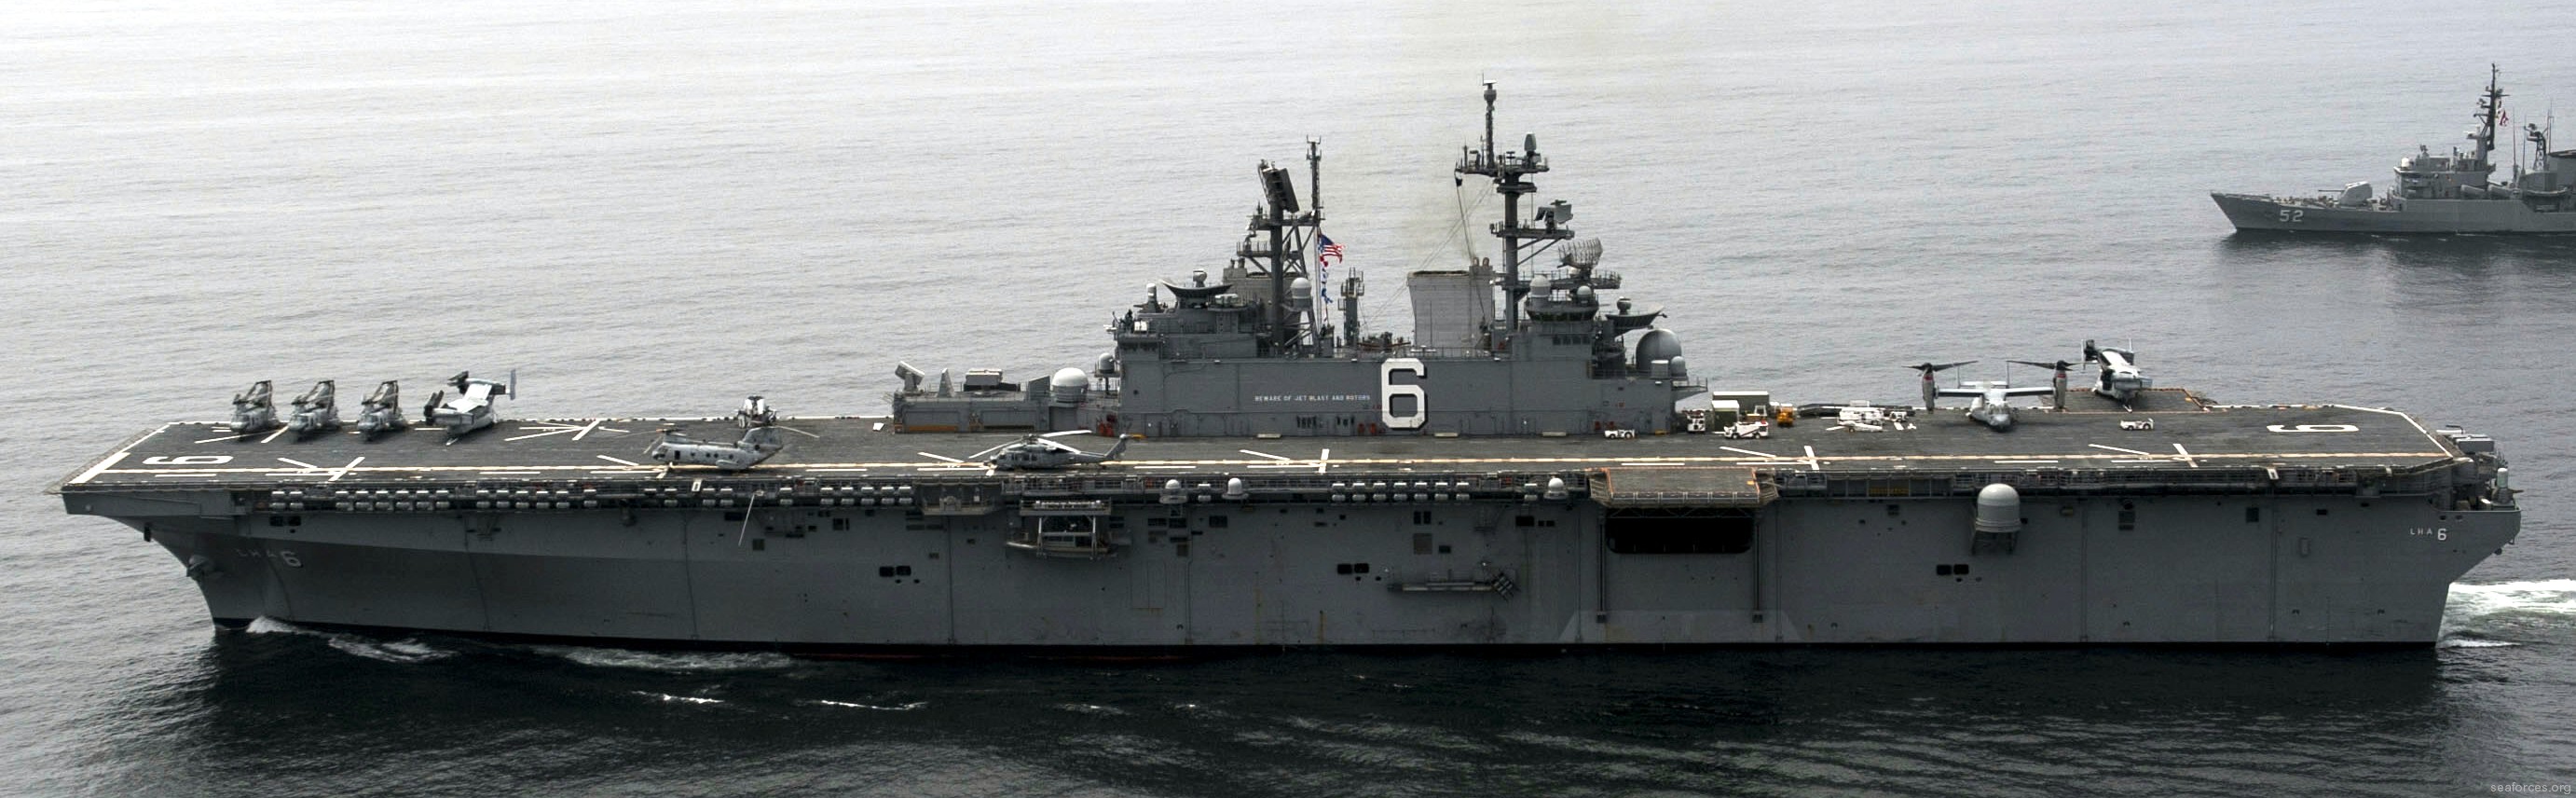 lha-6 uss america amphibious assault ship us navy 78